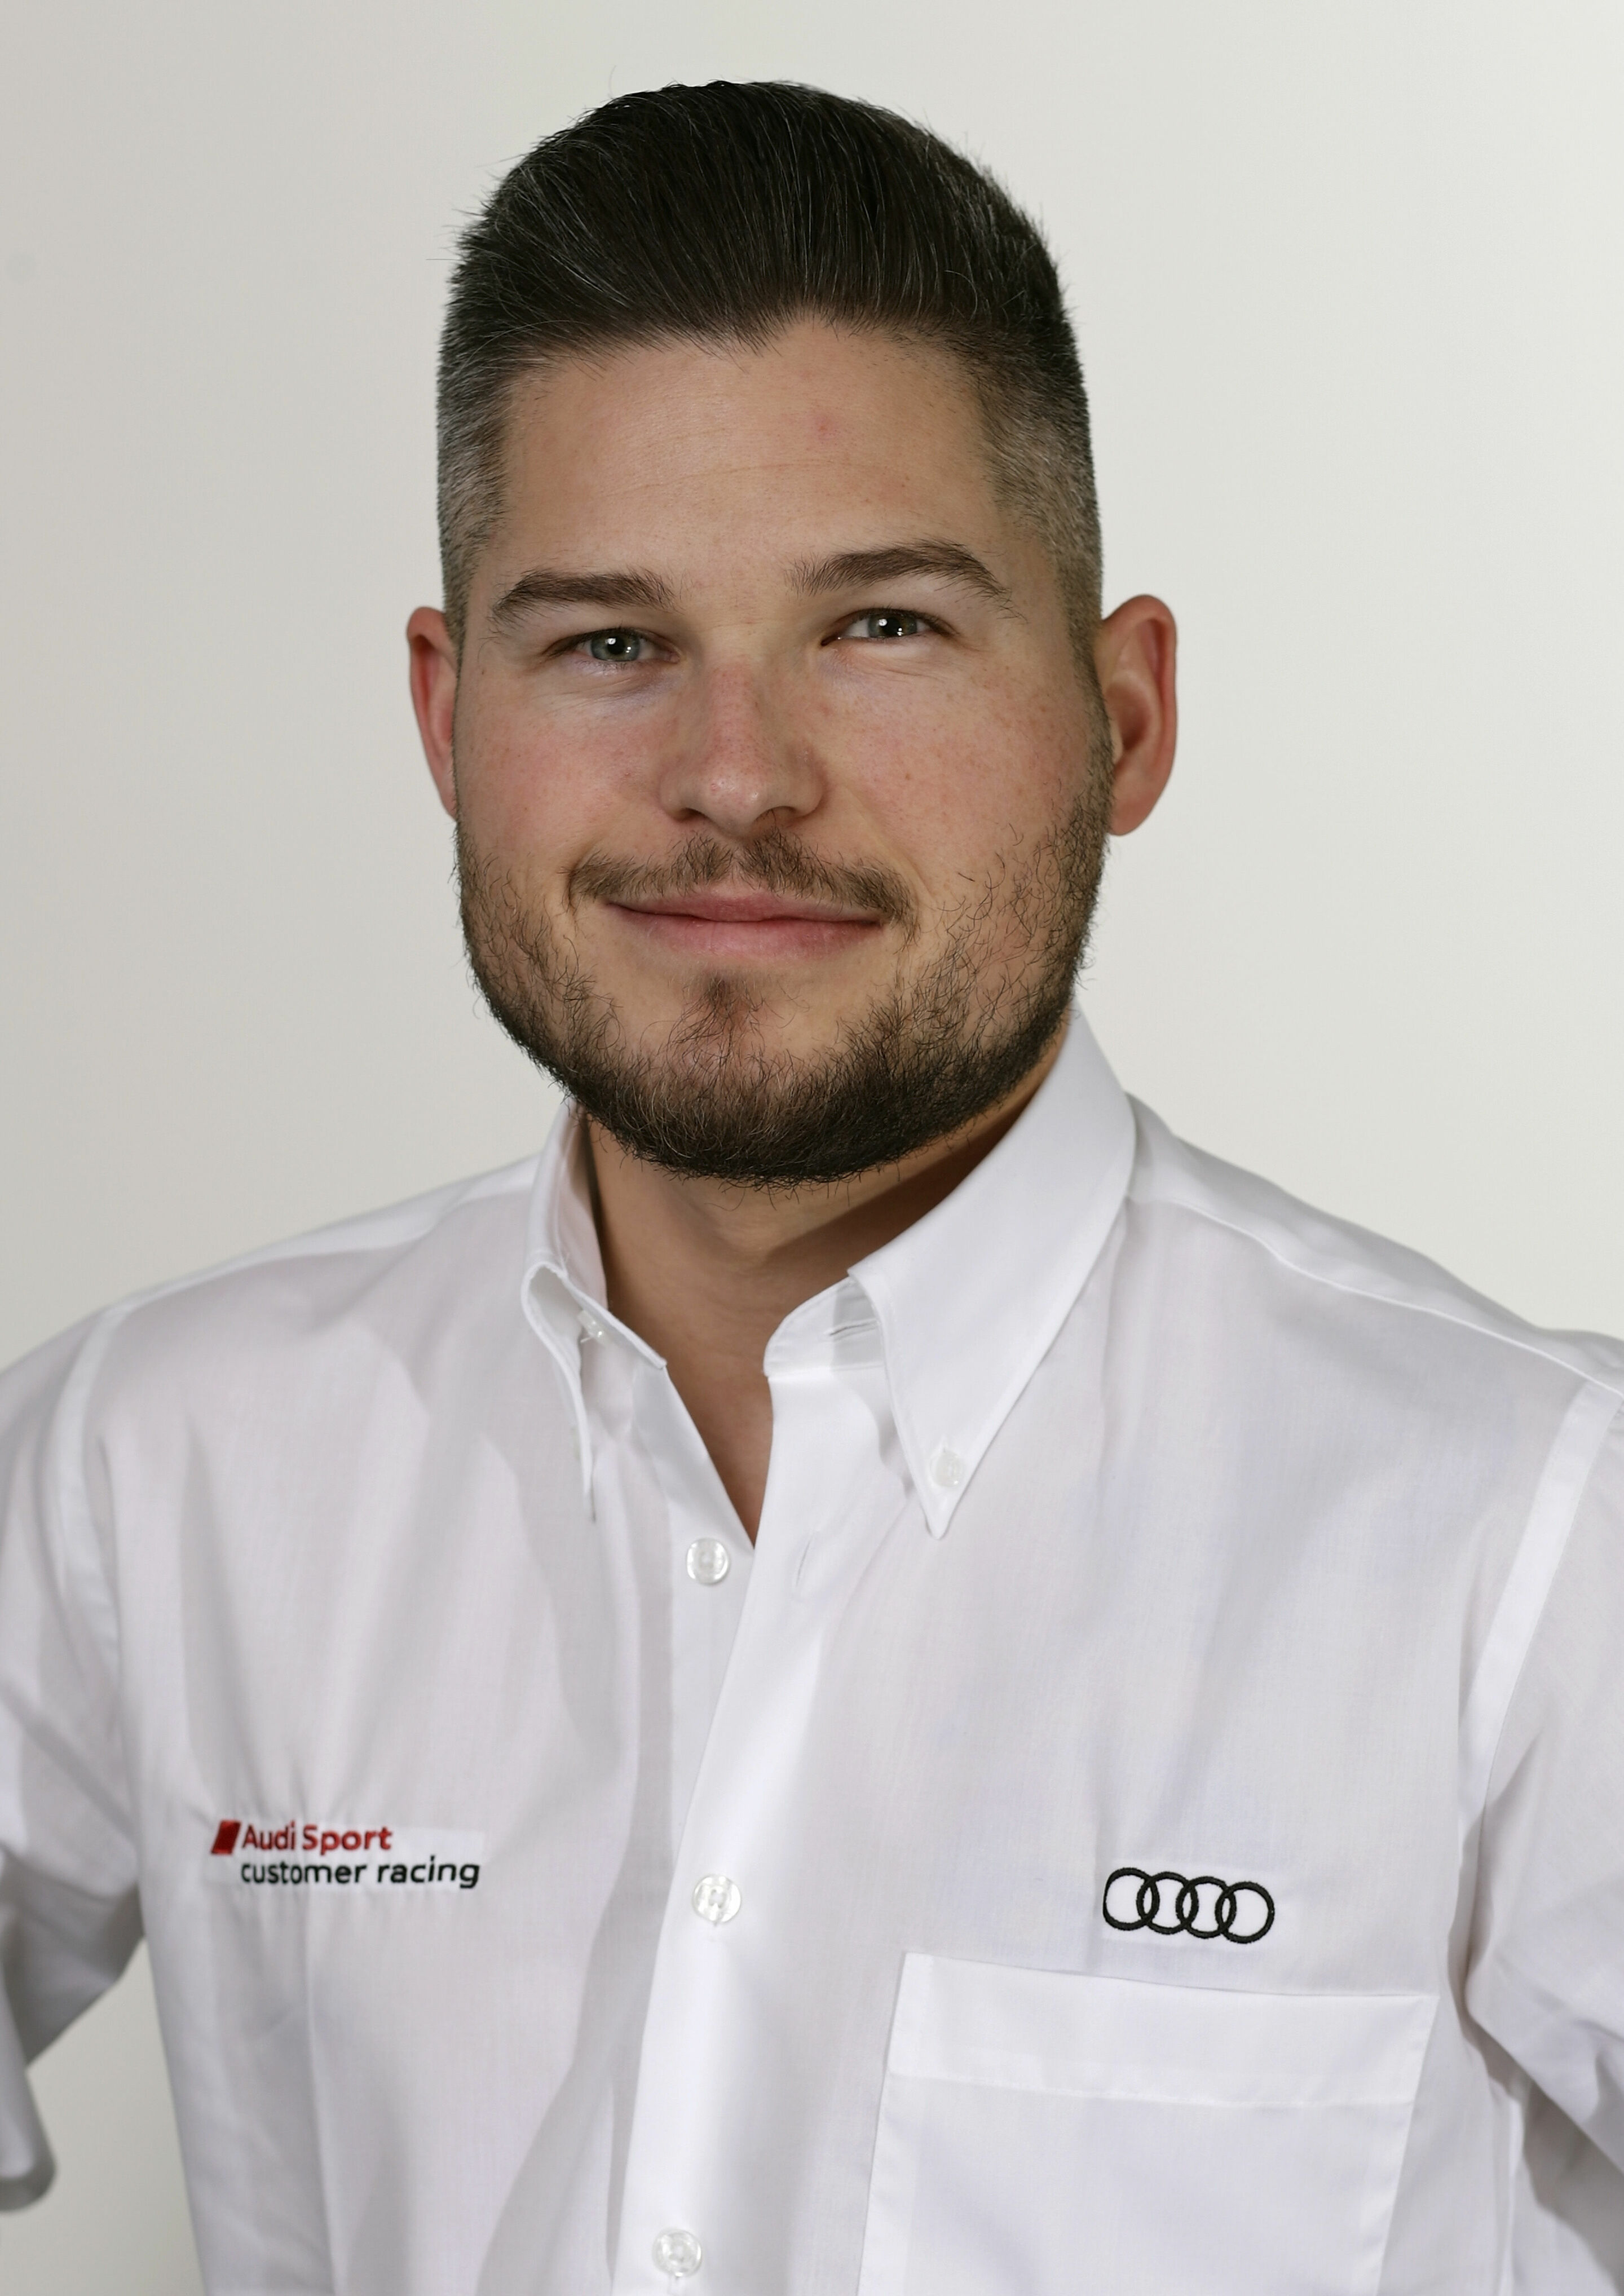 Audi Sport customer racing 2020